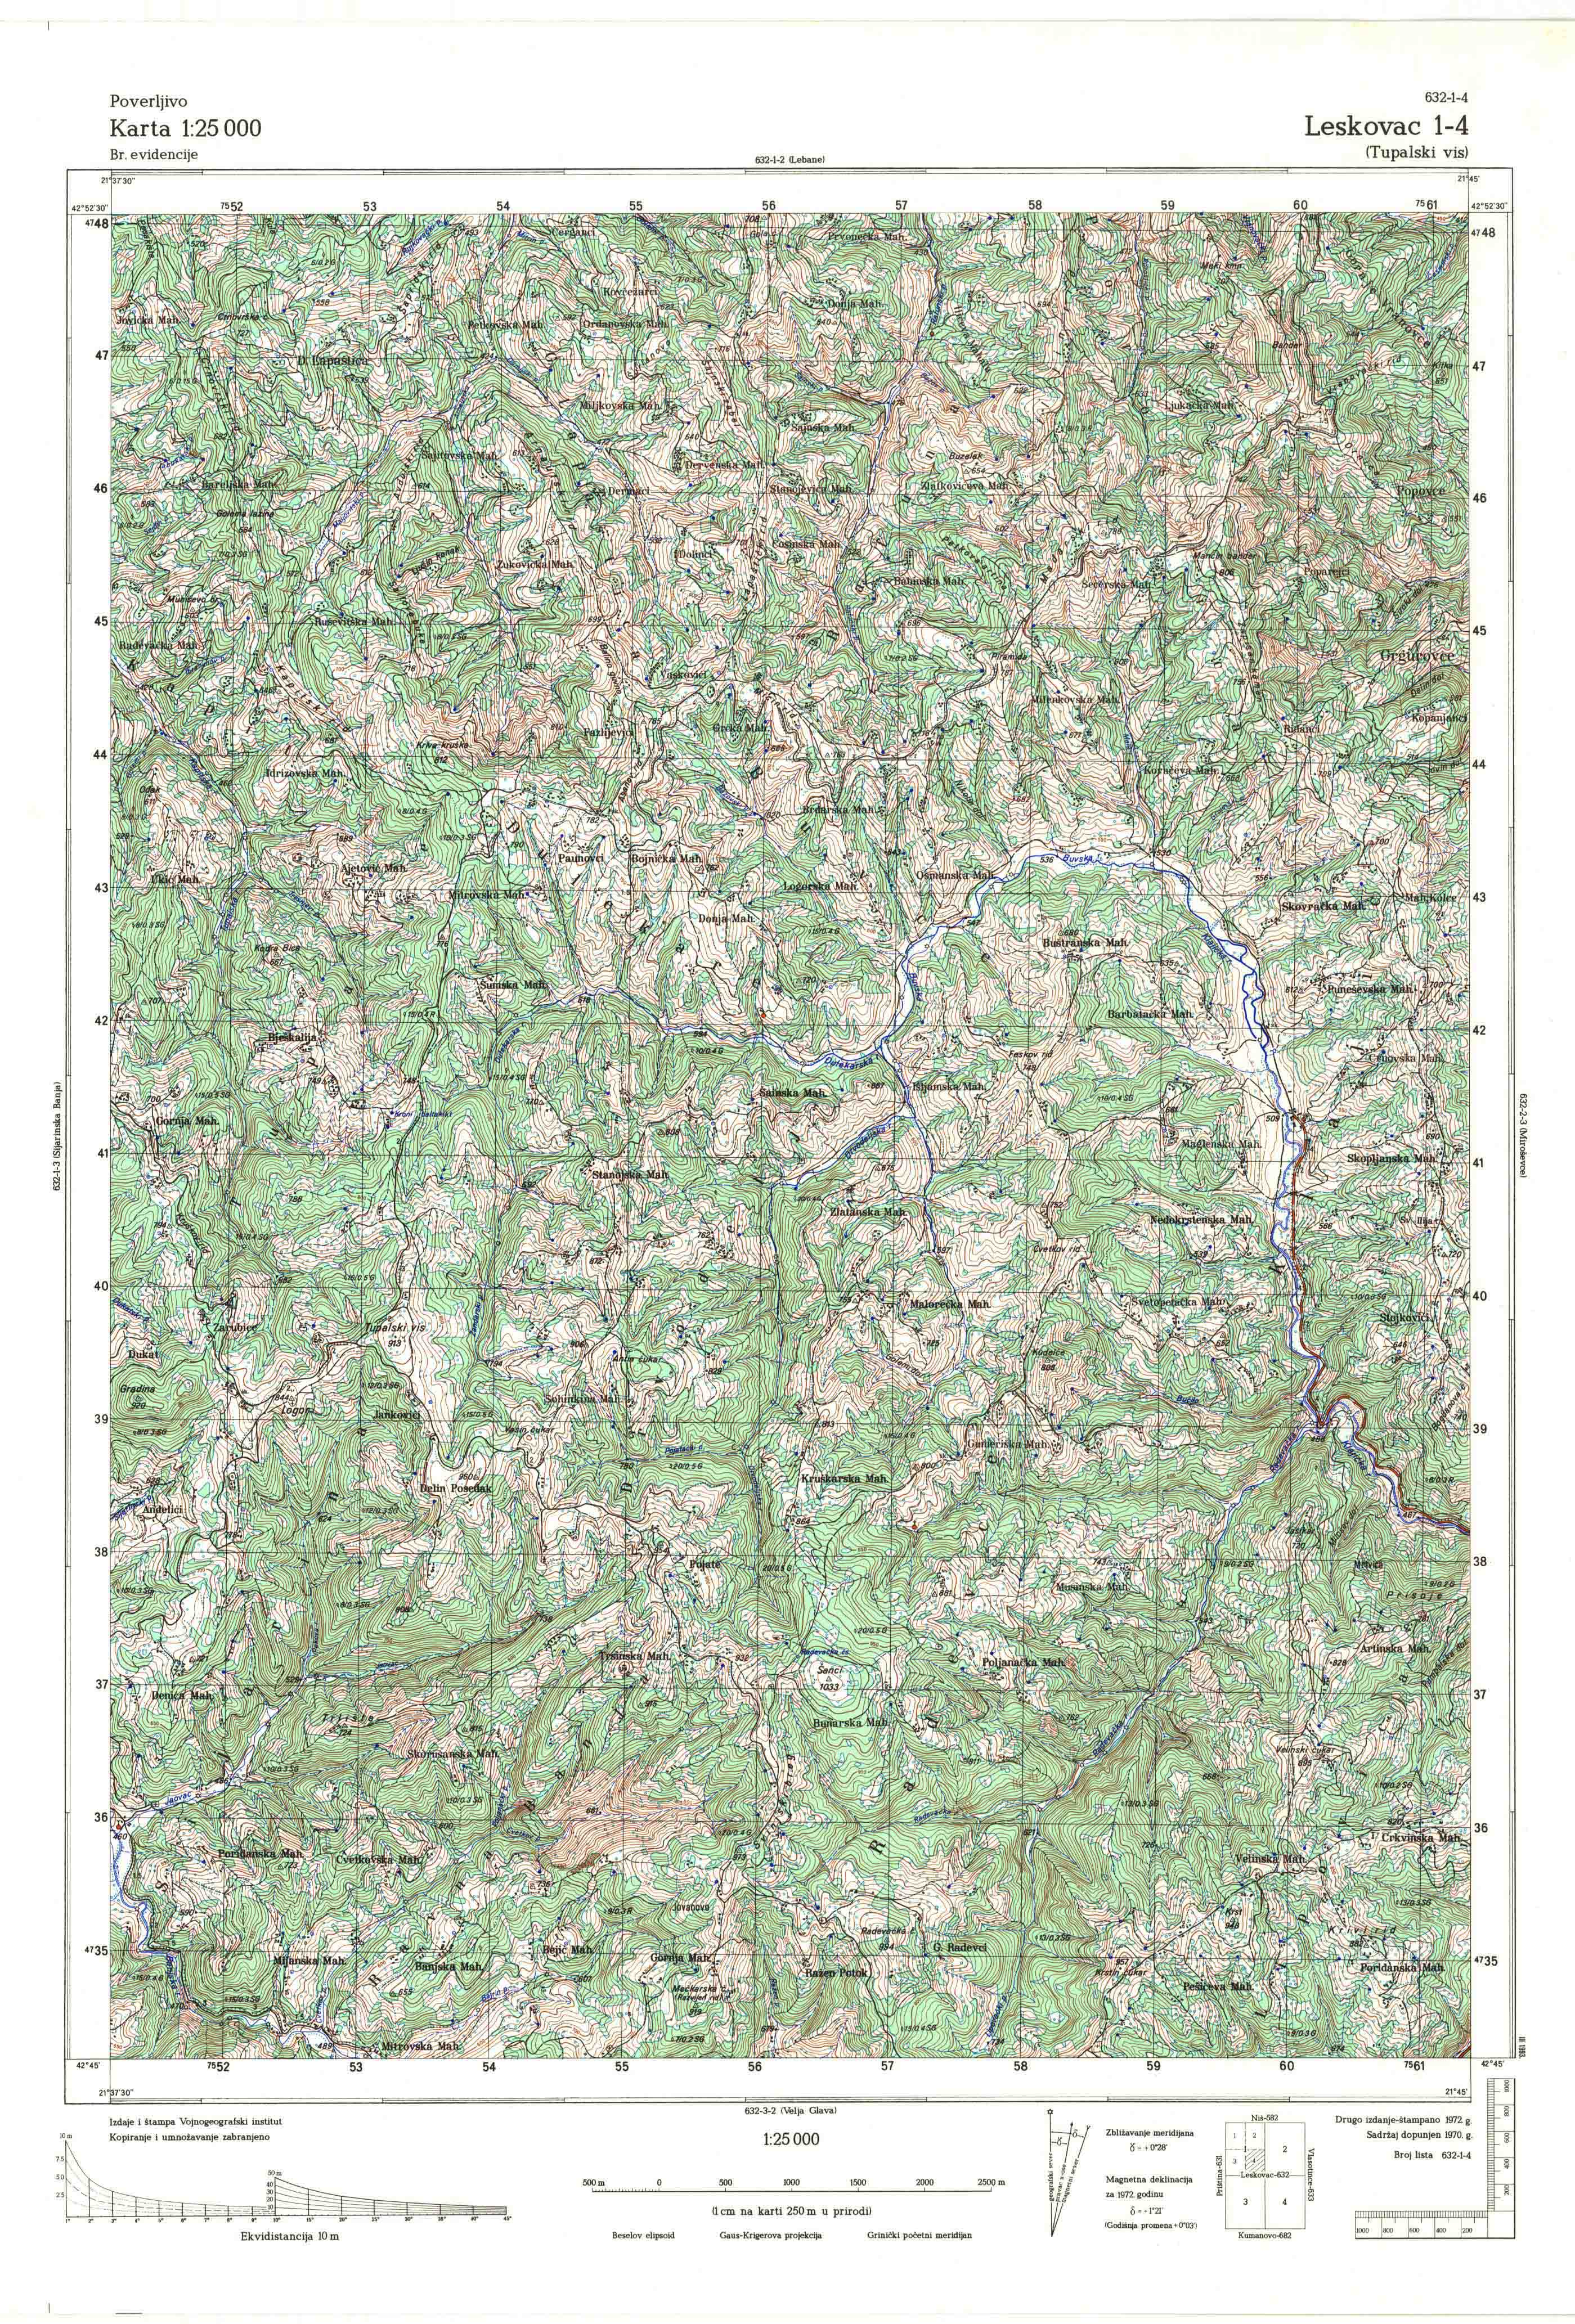  topografska karta srbije 25000 JNA  Leskovac